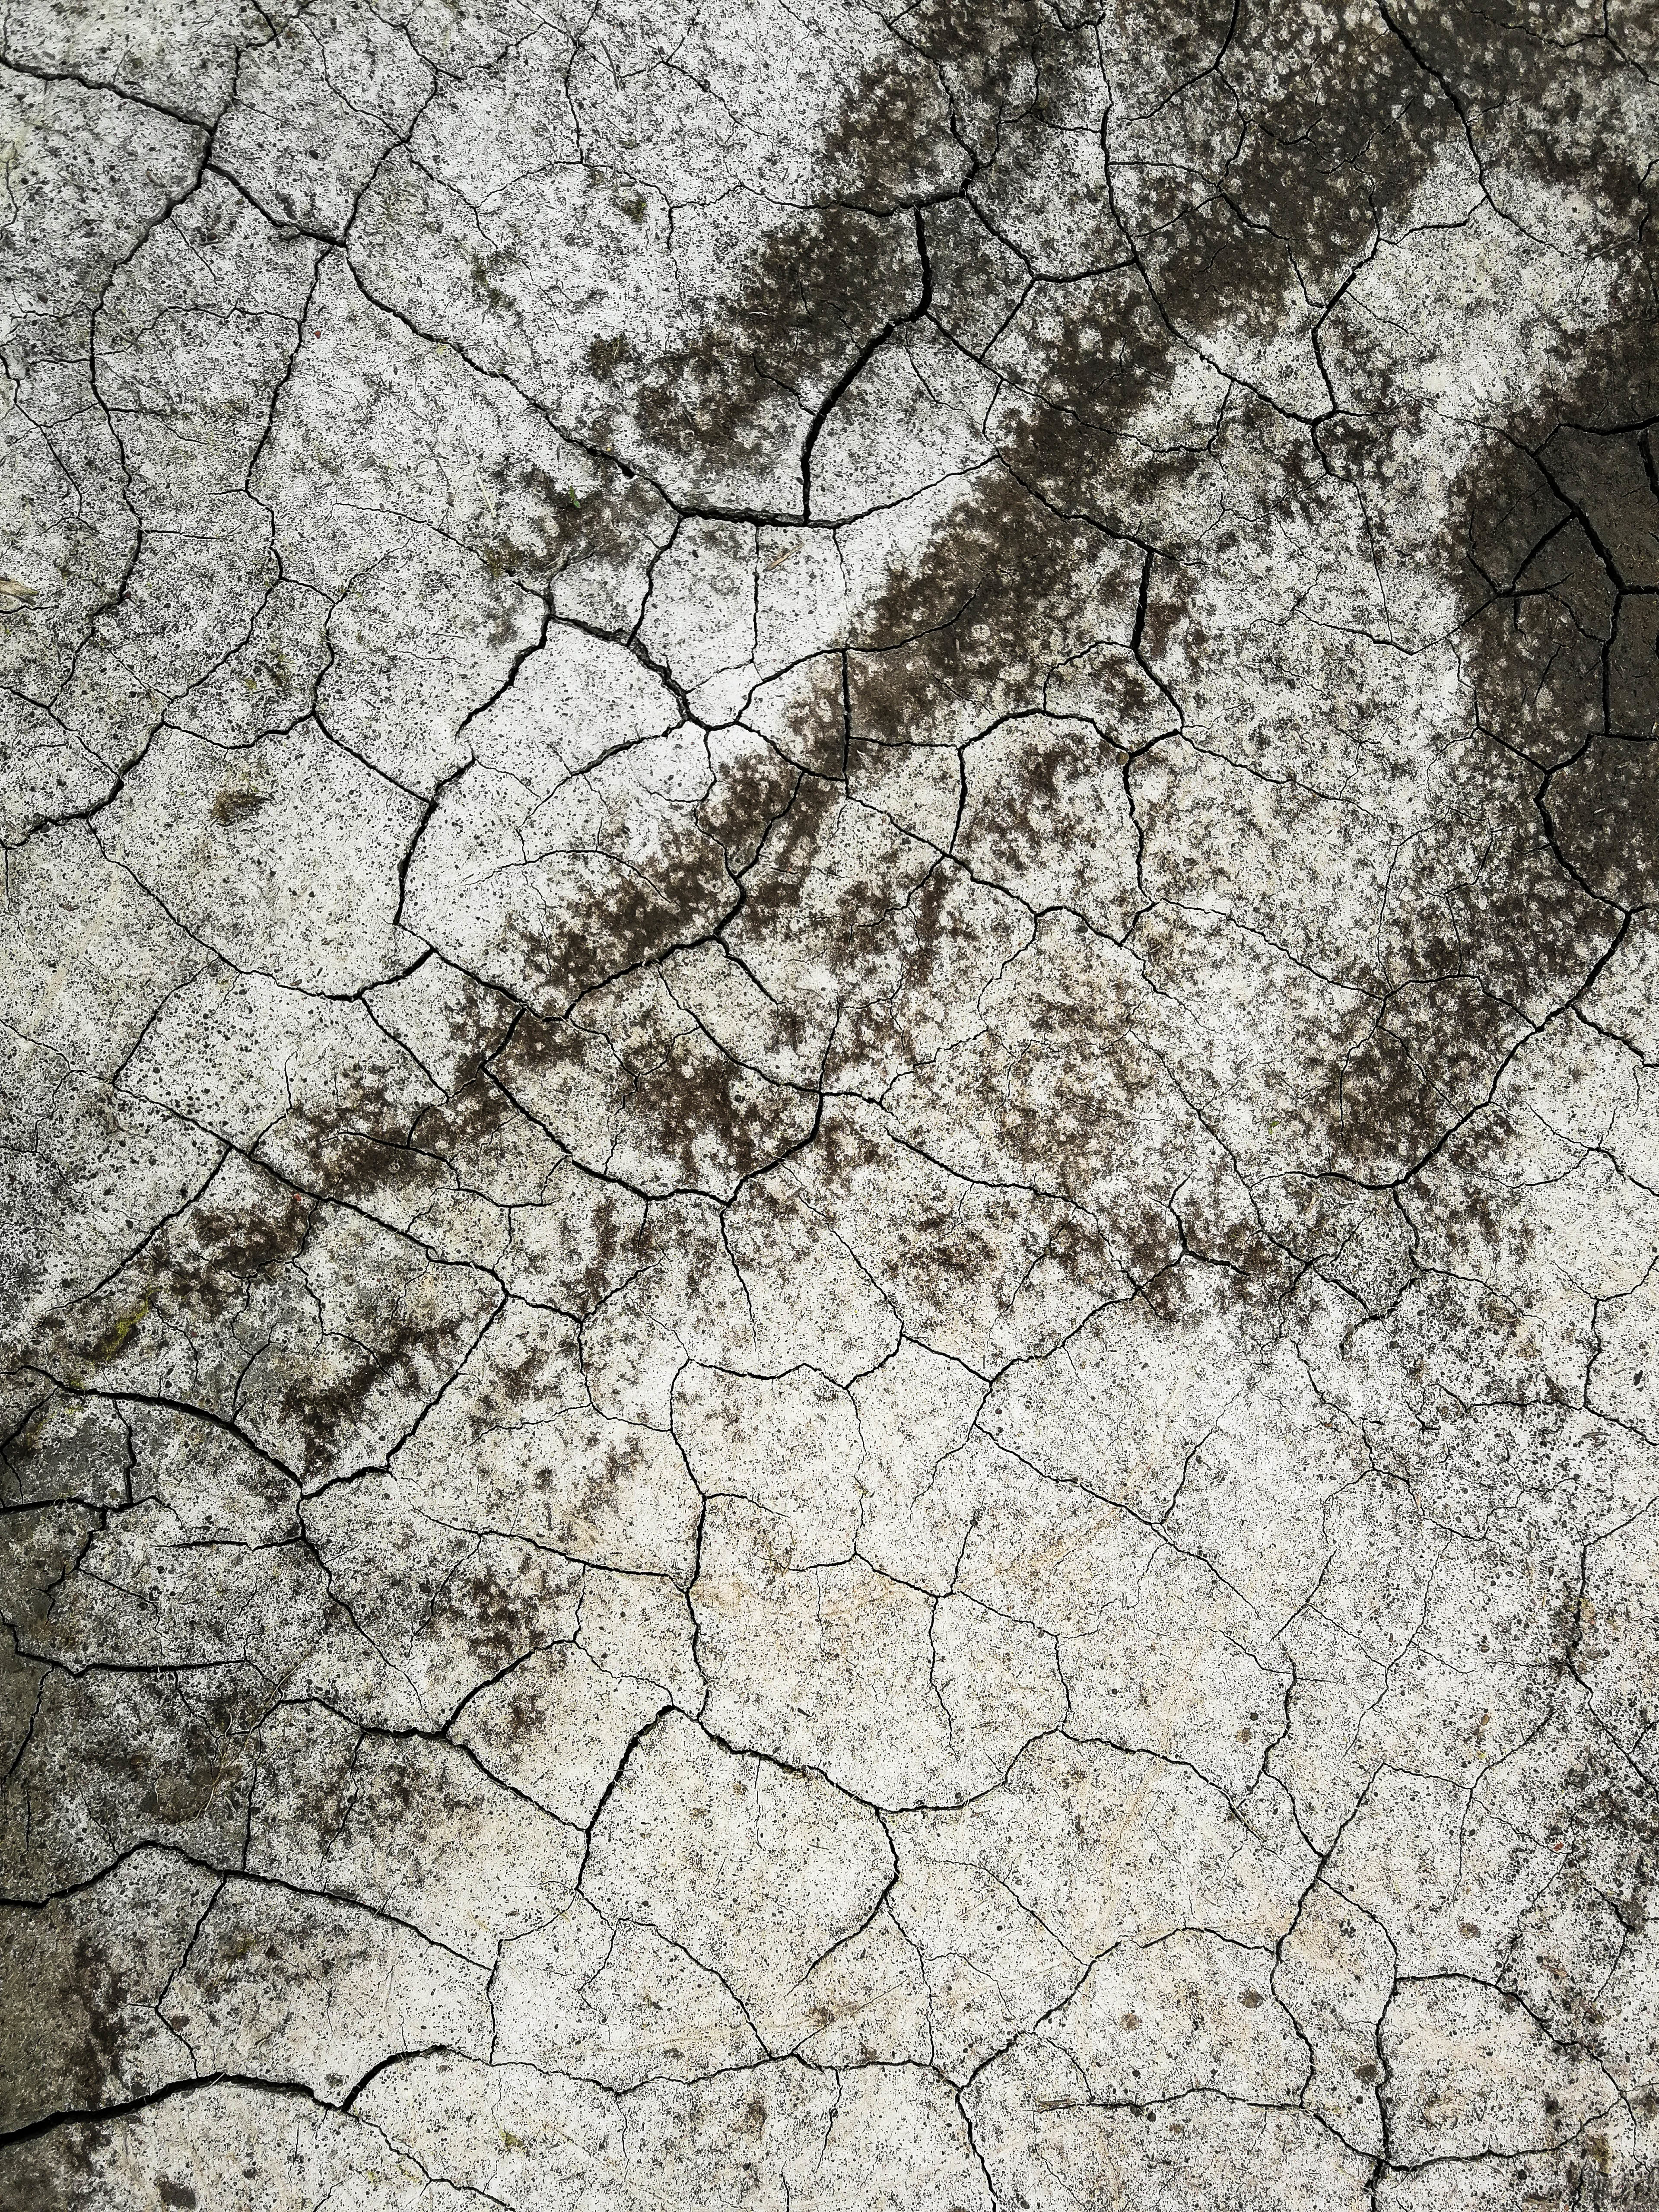 textures, earth, texture, land, cracks, crack, drought